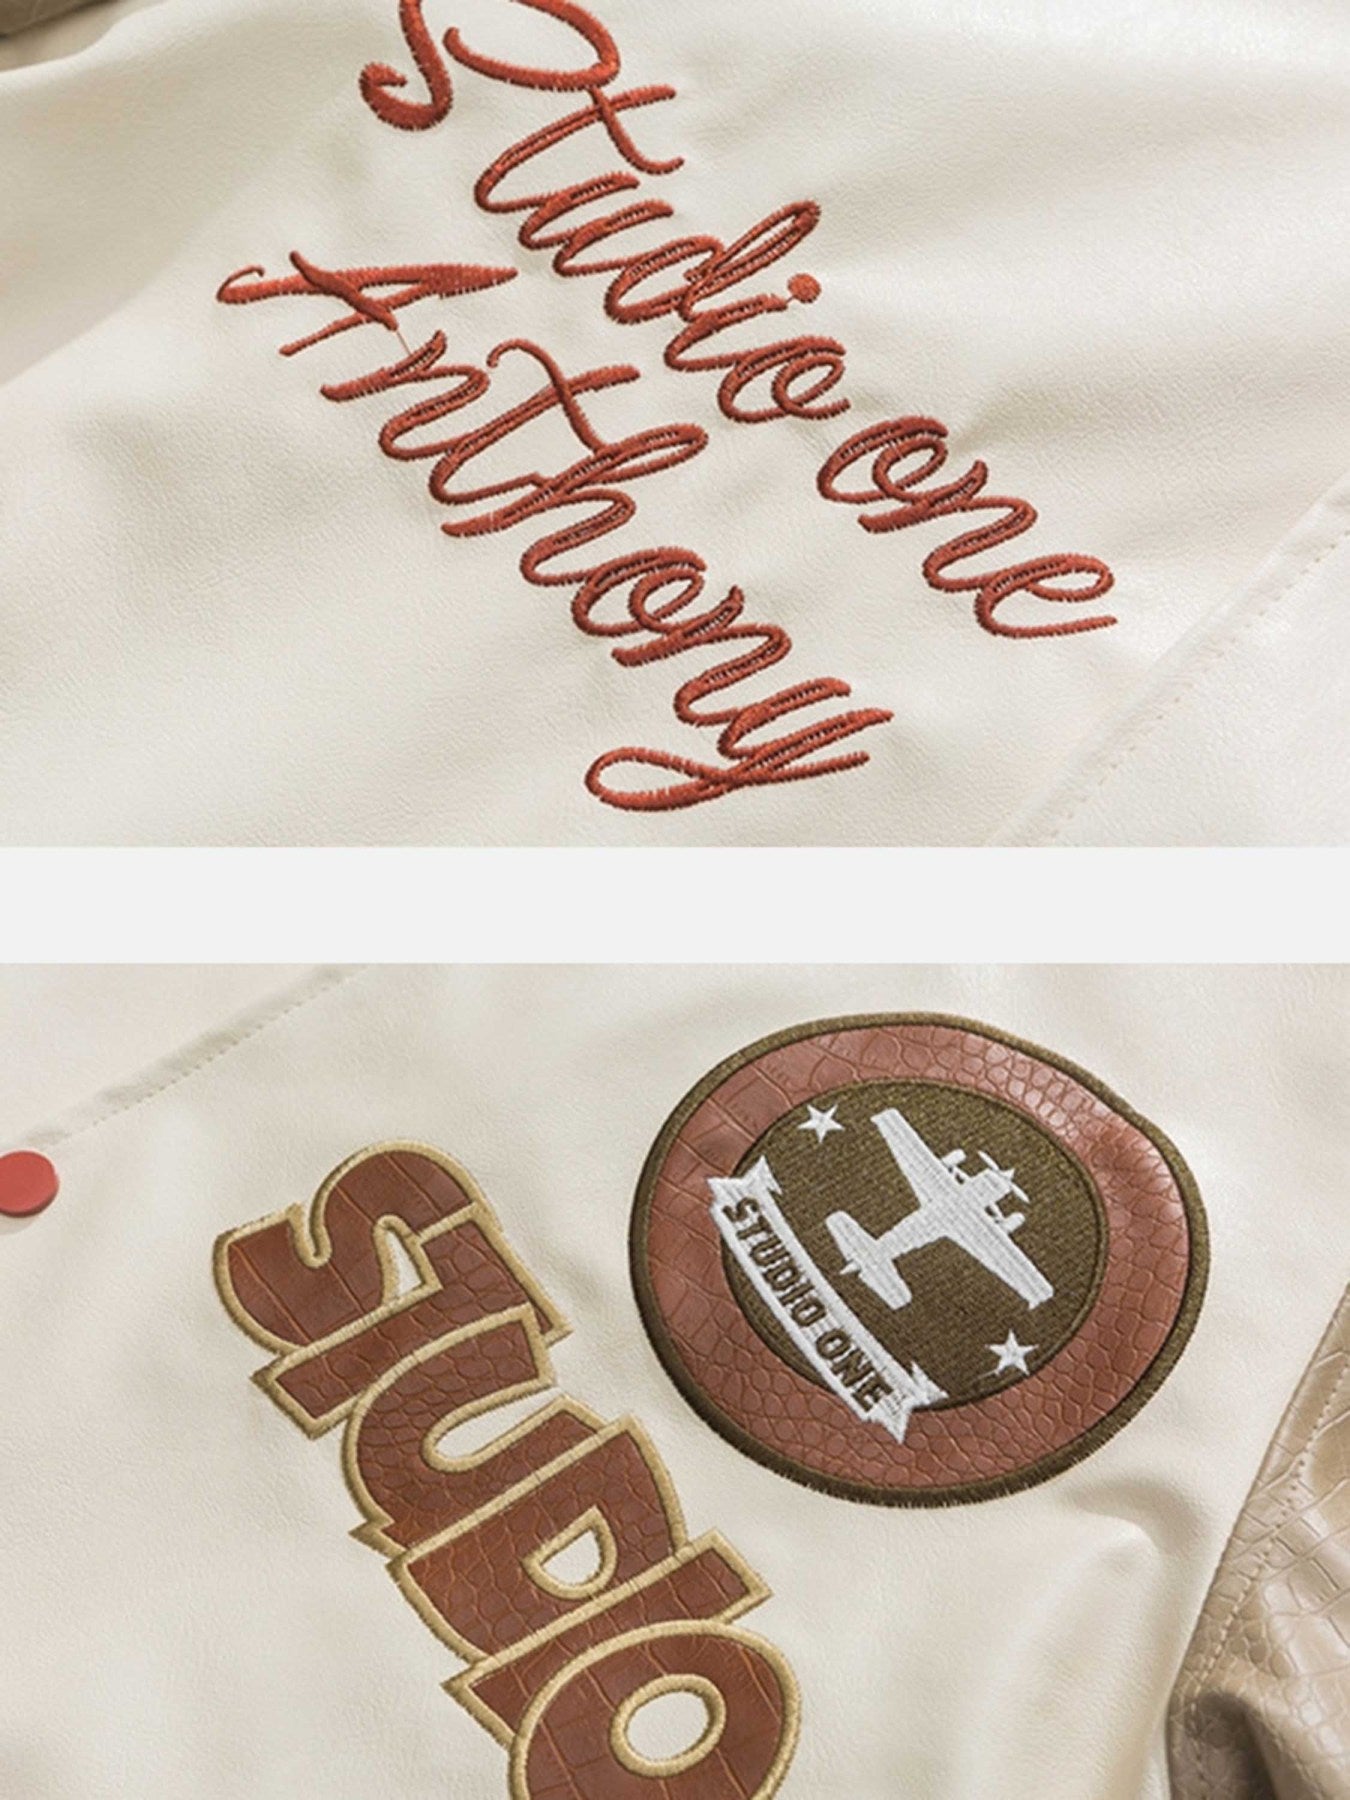 The Supermade PU Leather Stitching Embroidered Baseball Jacket